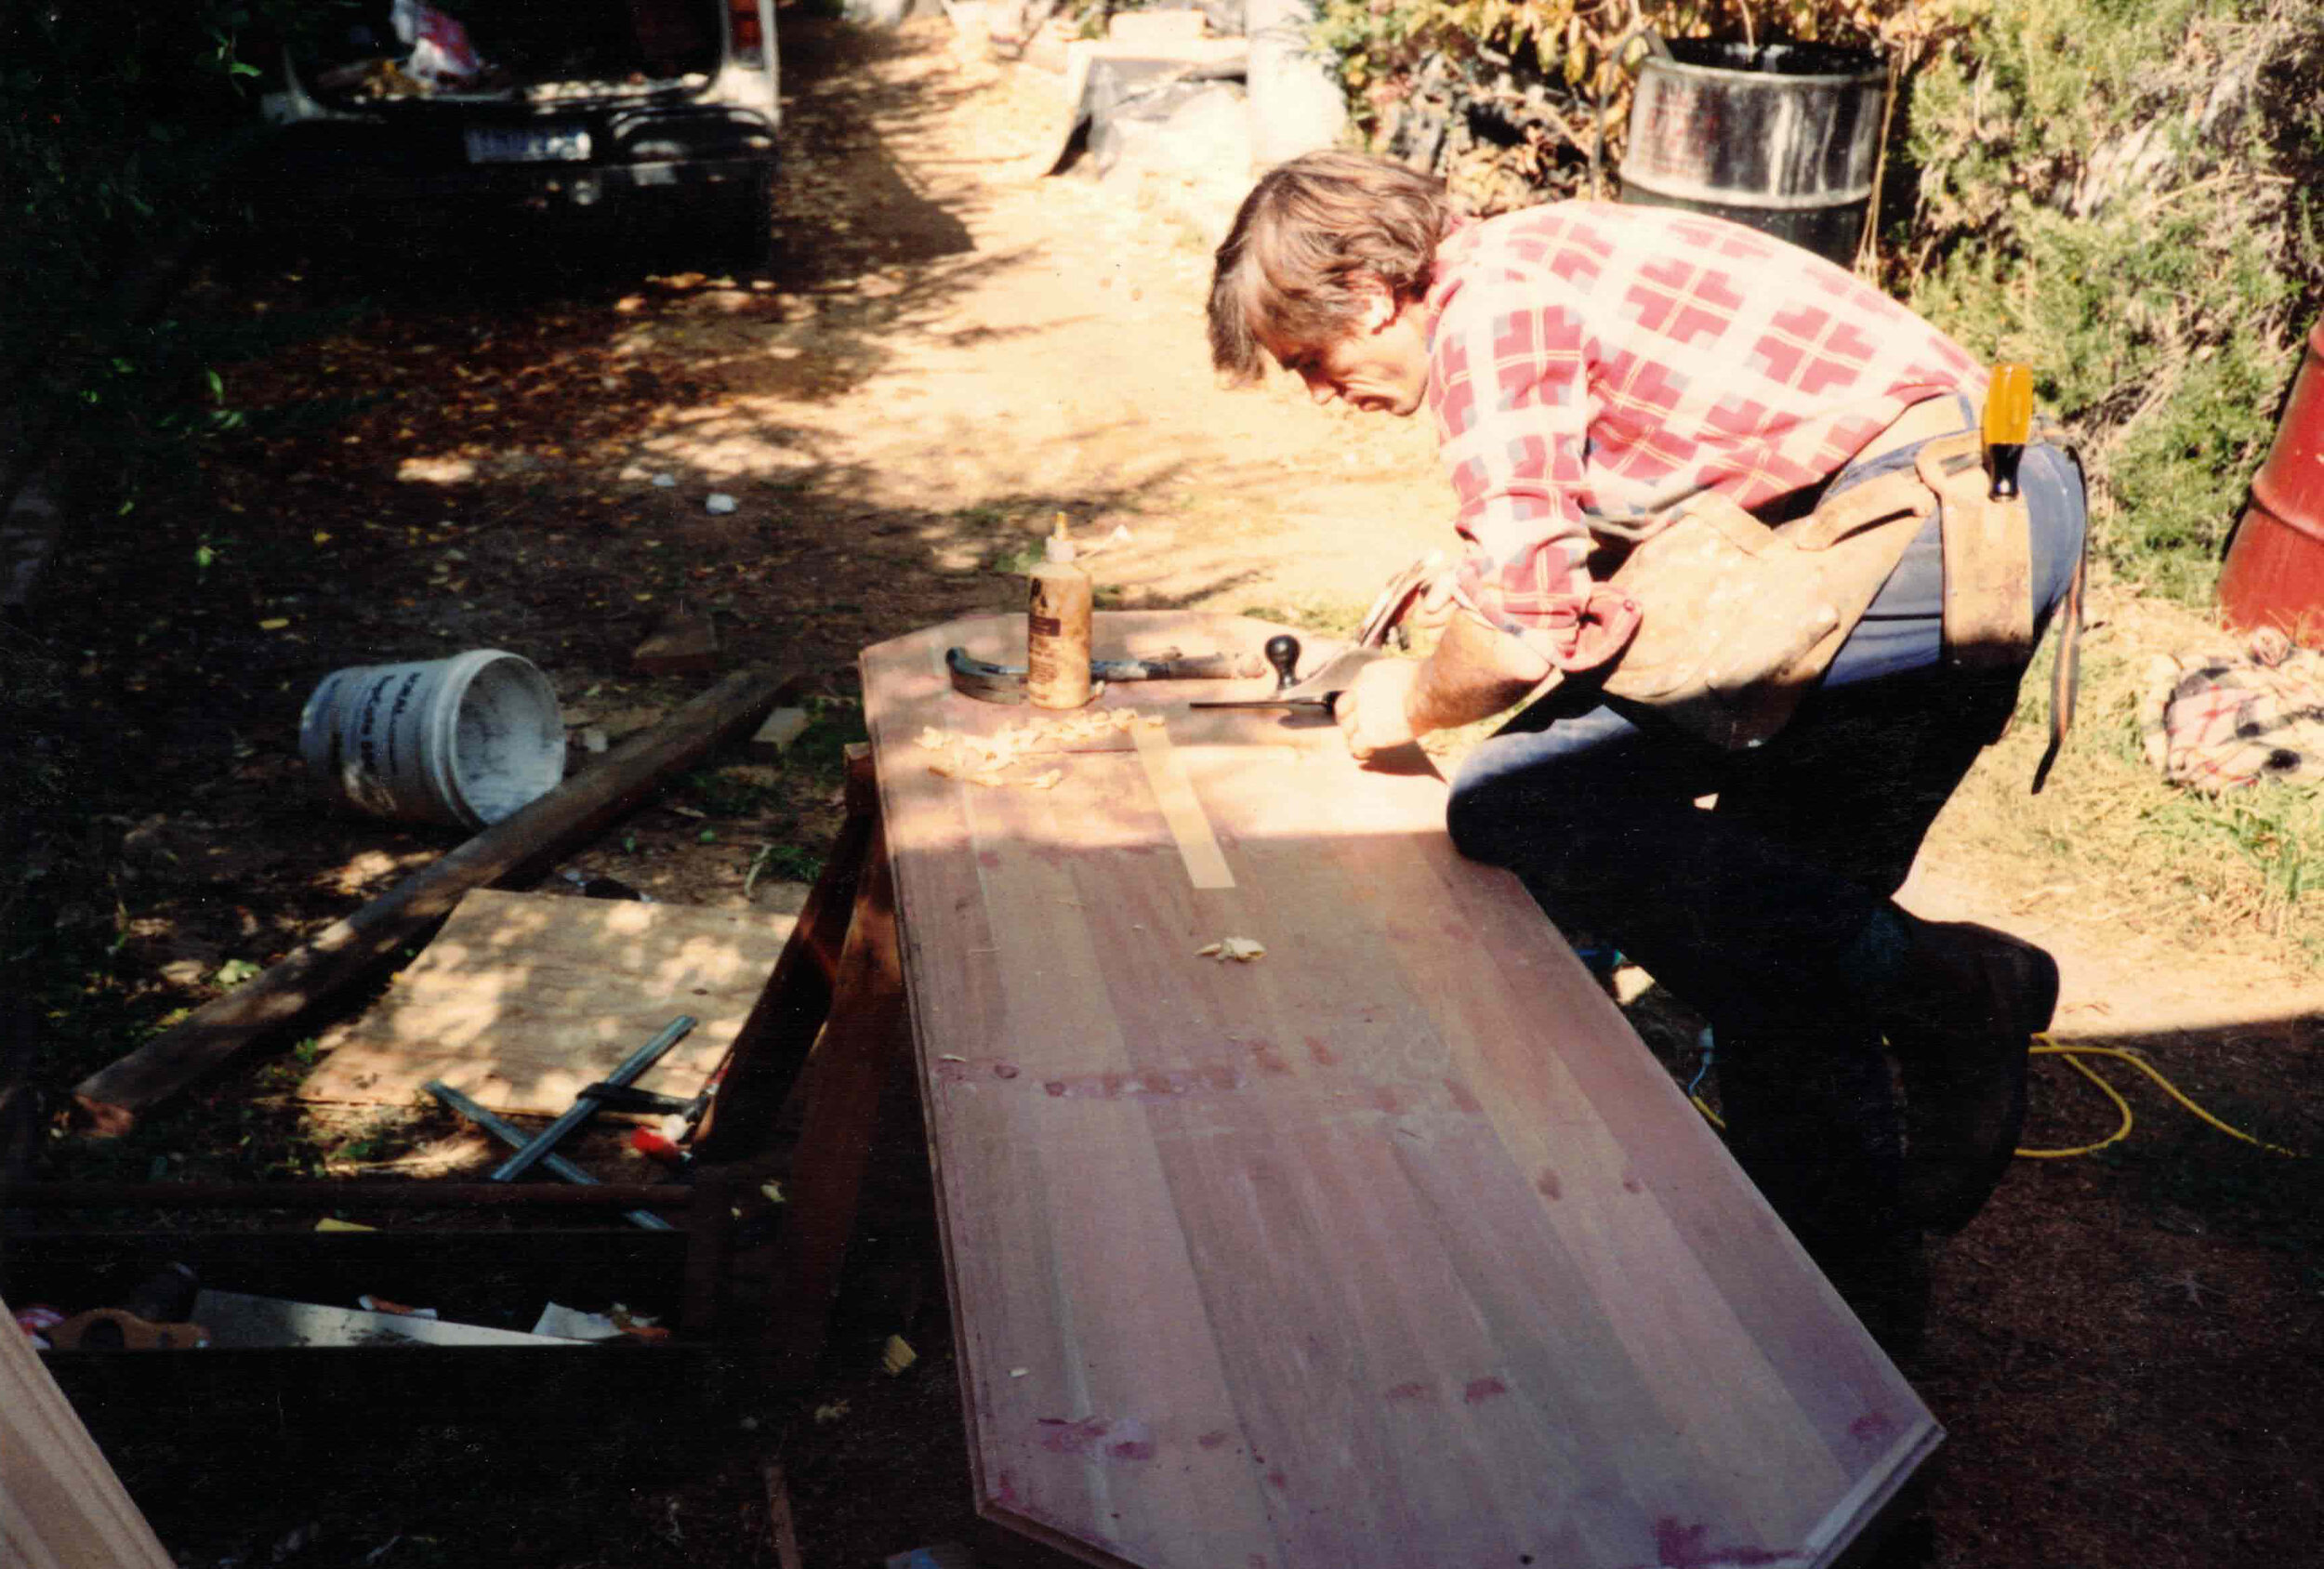  Paul Lynzaat helping make Thor’s Nanny's casket, 1992 